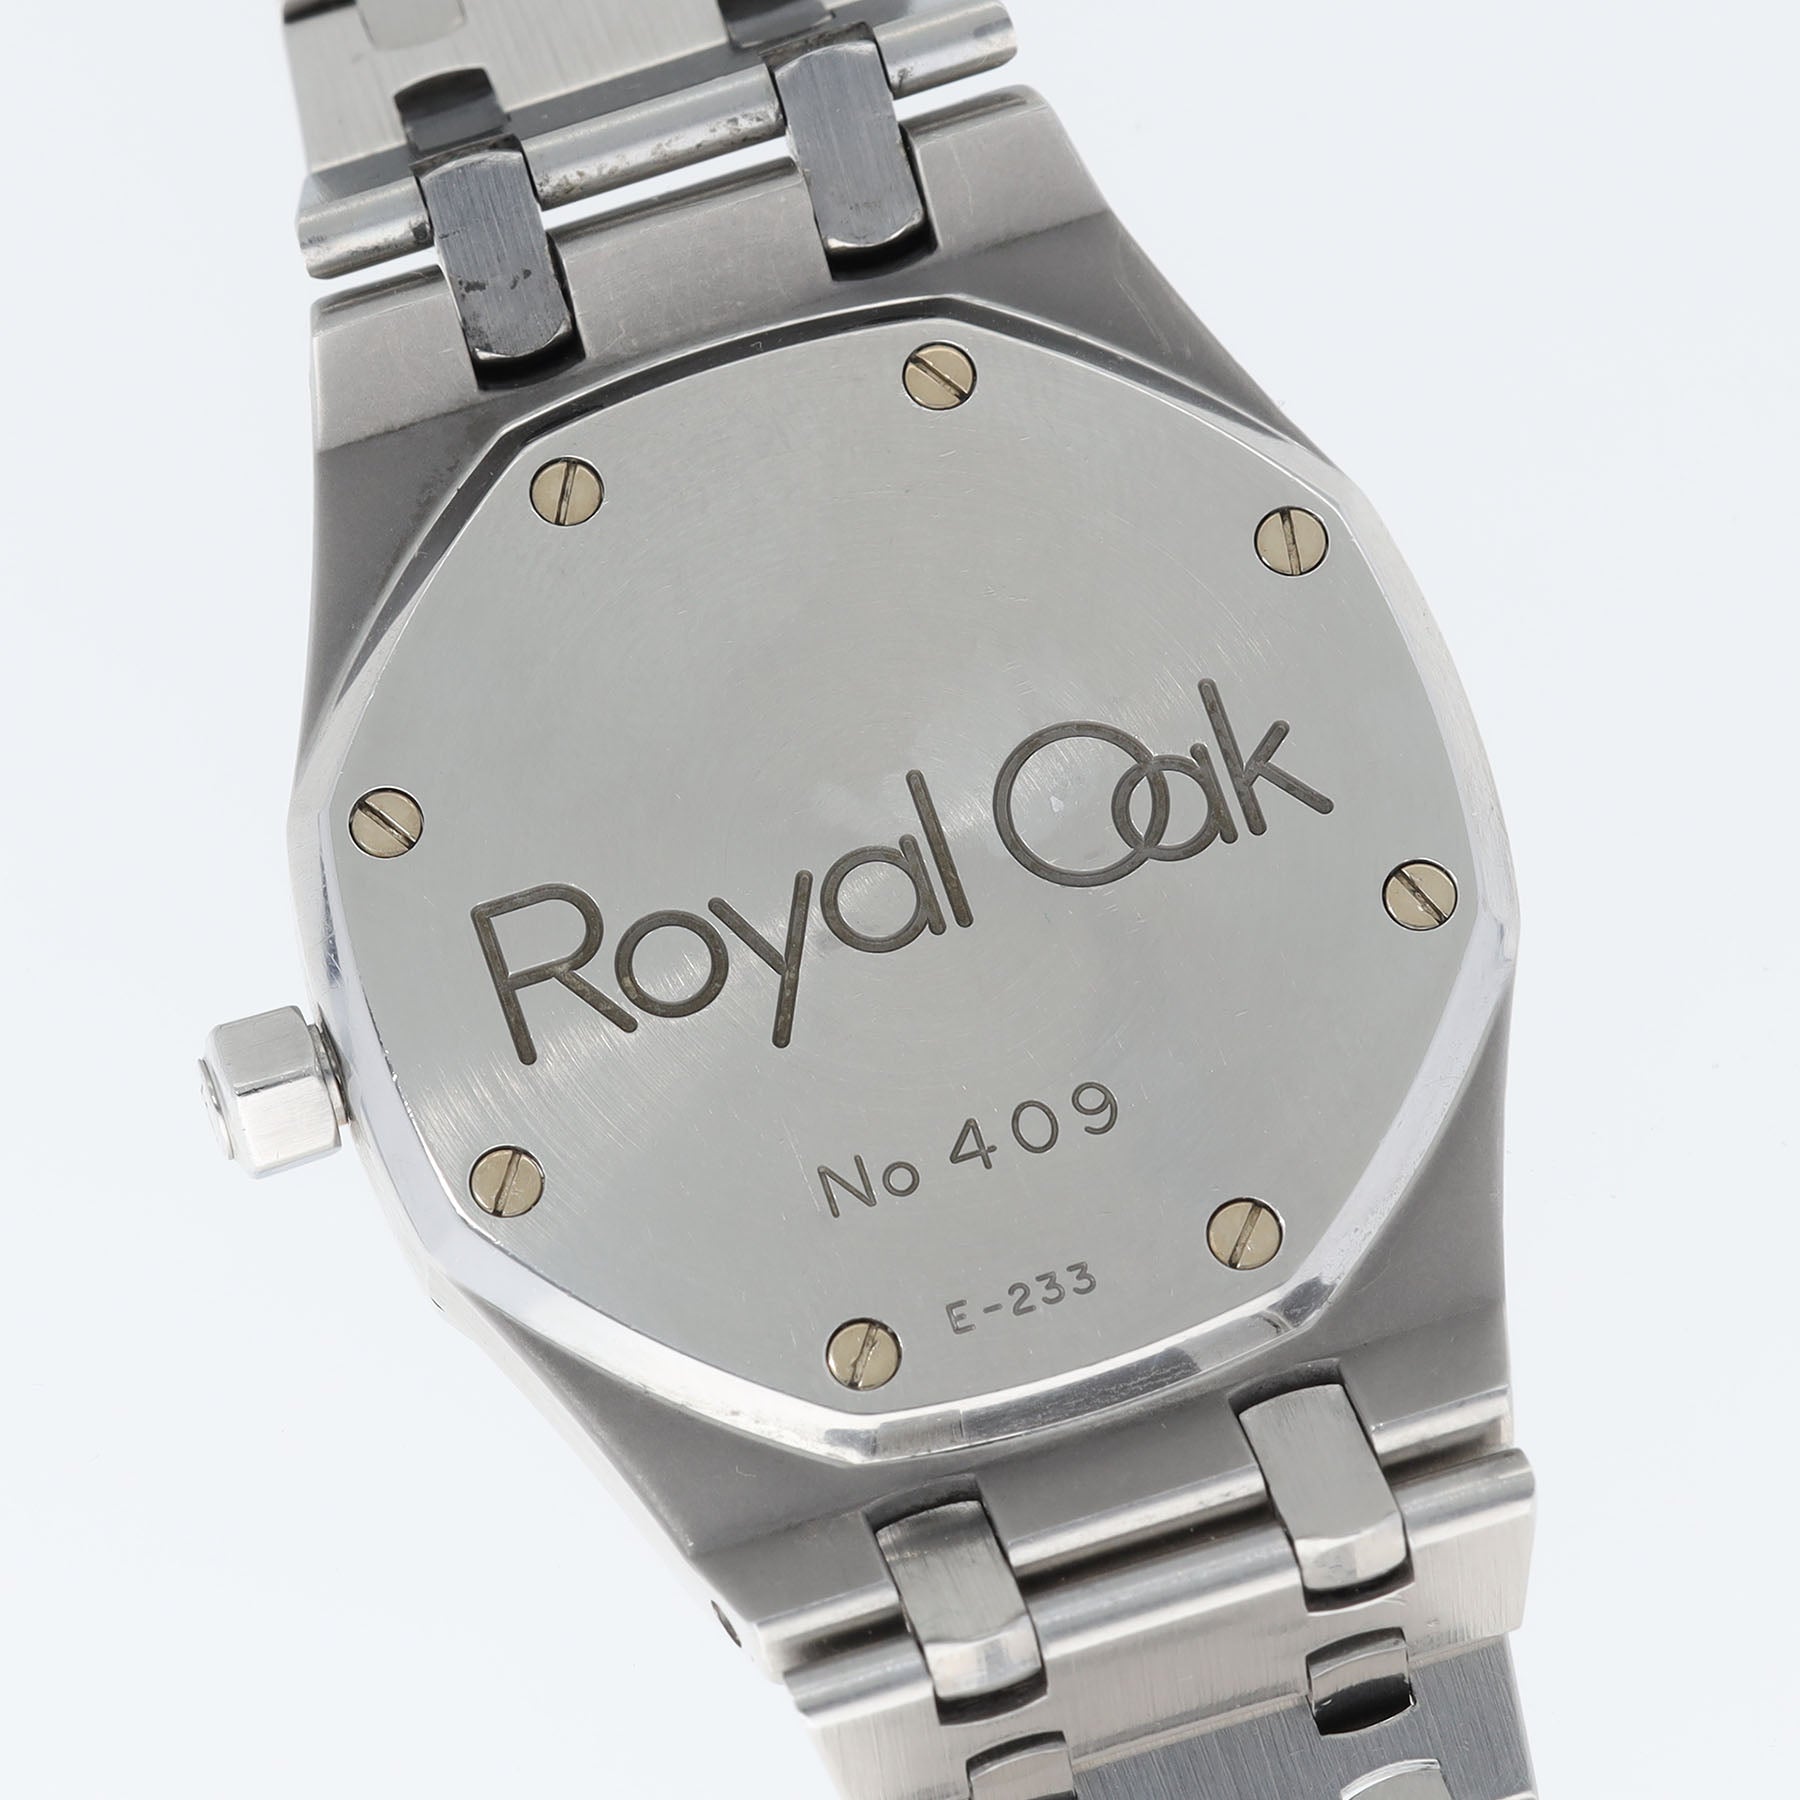 Audemars Piguet Royal Oak 14790 Tropical dial with Original Guarantee Paper